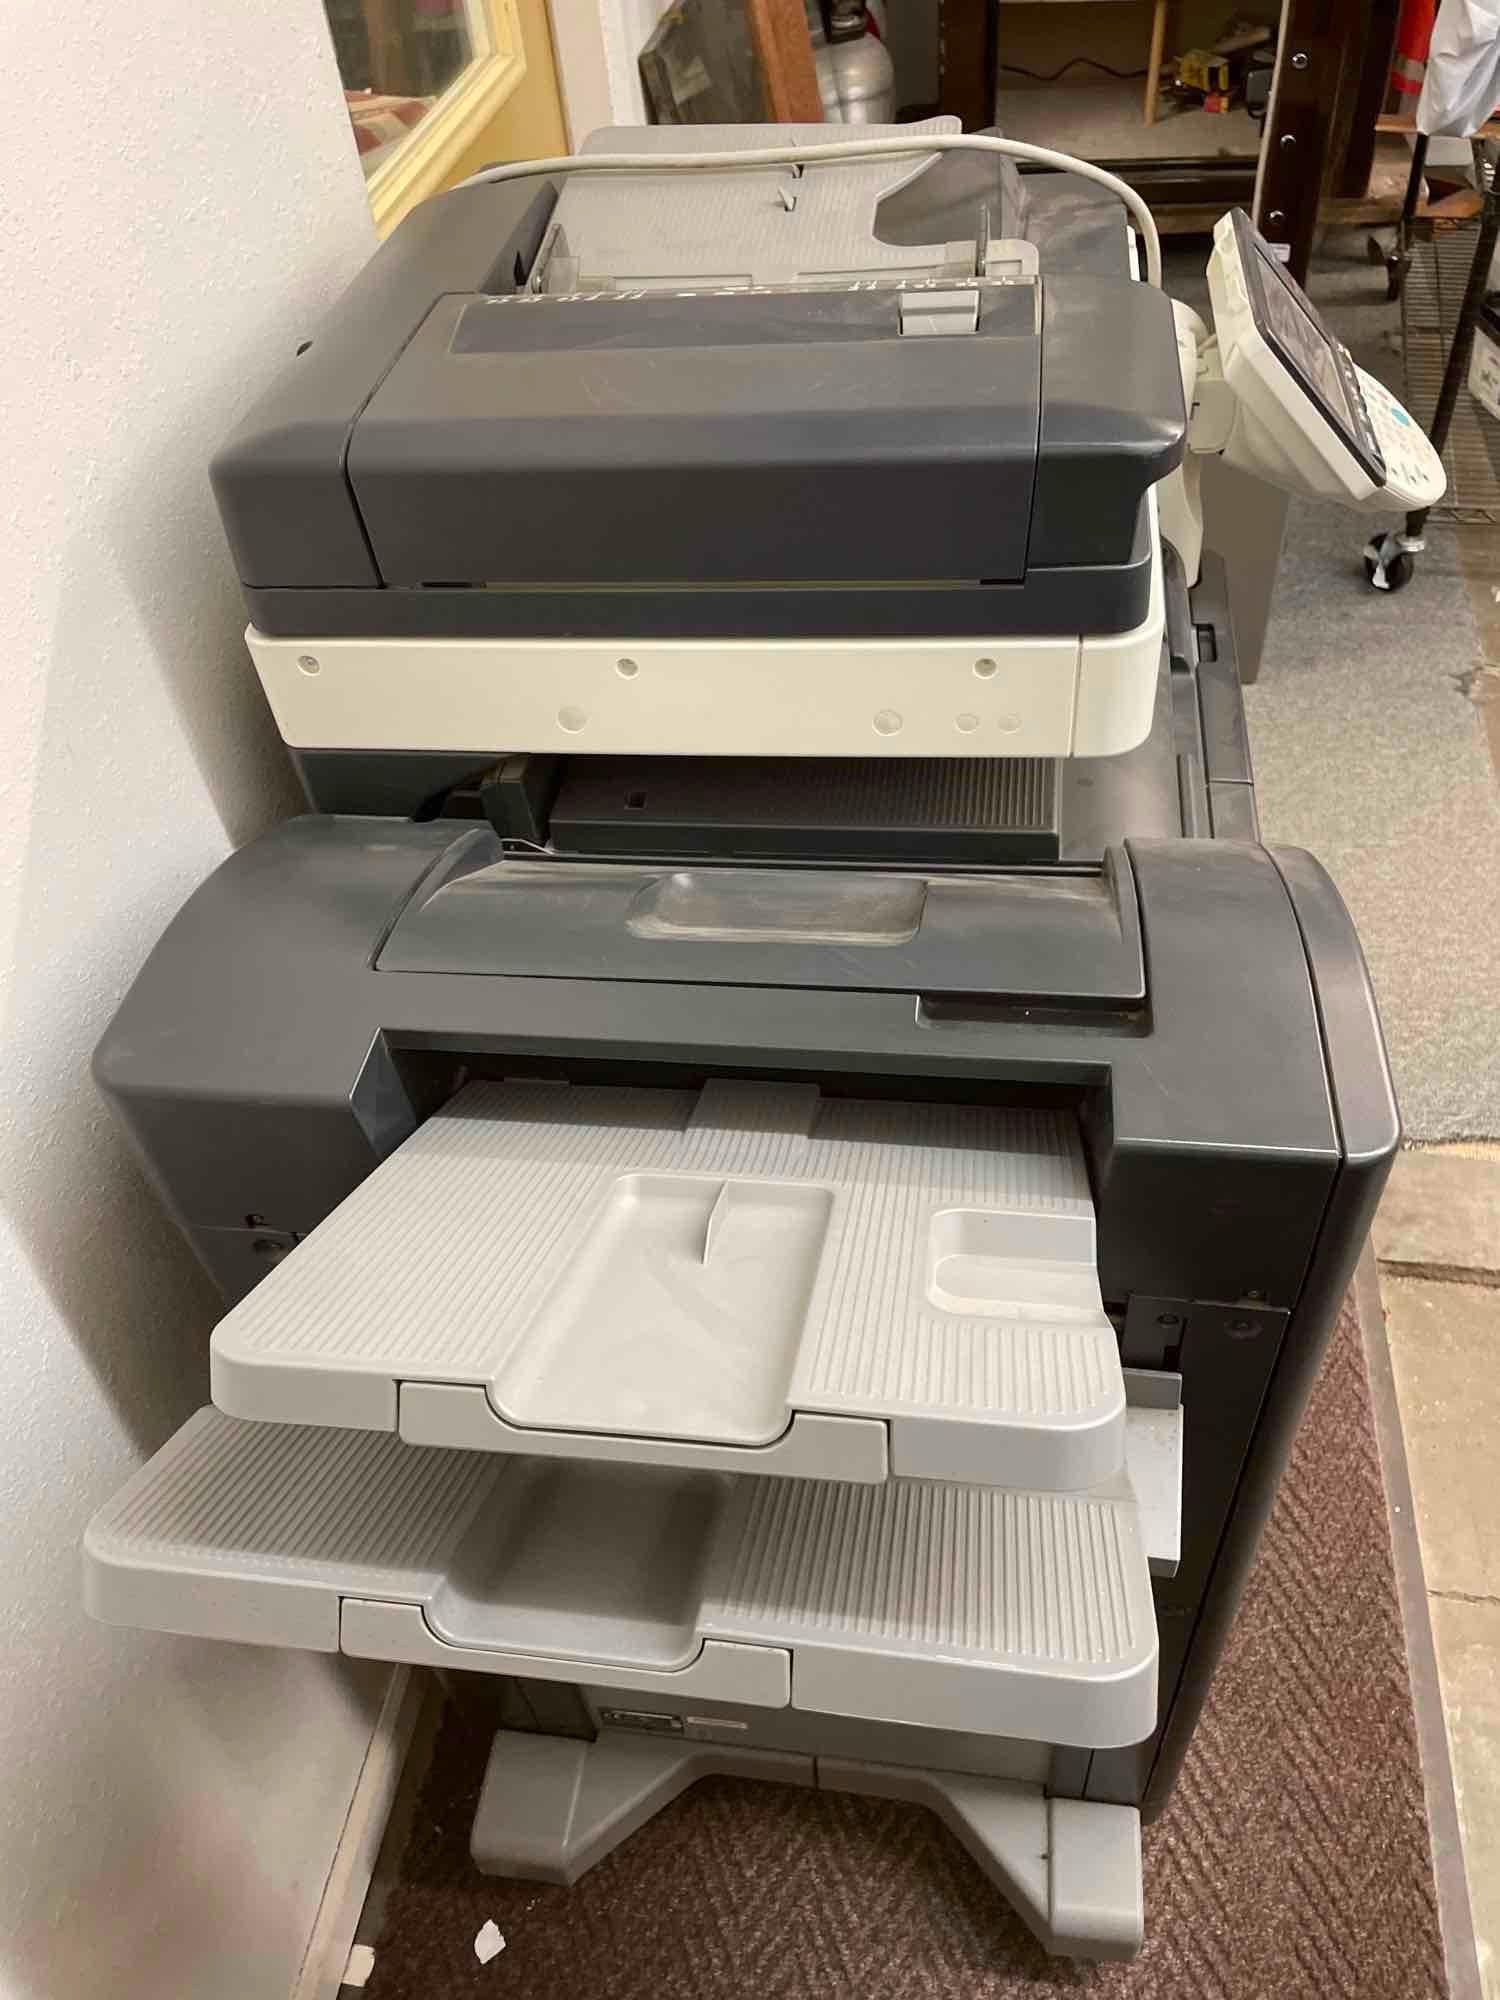 Bizhub 223 Printer